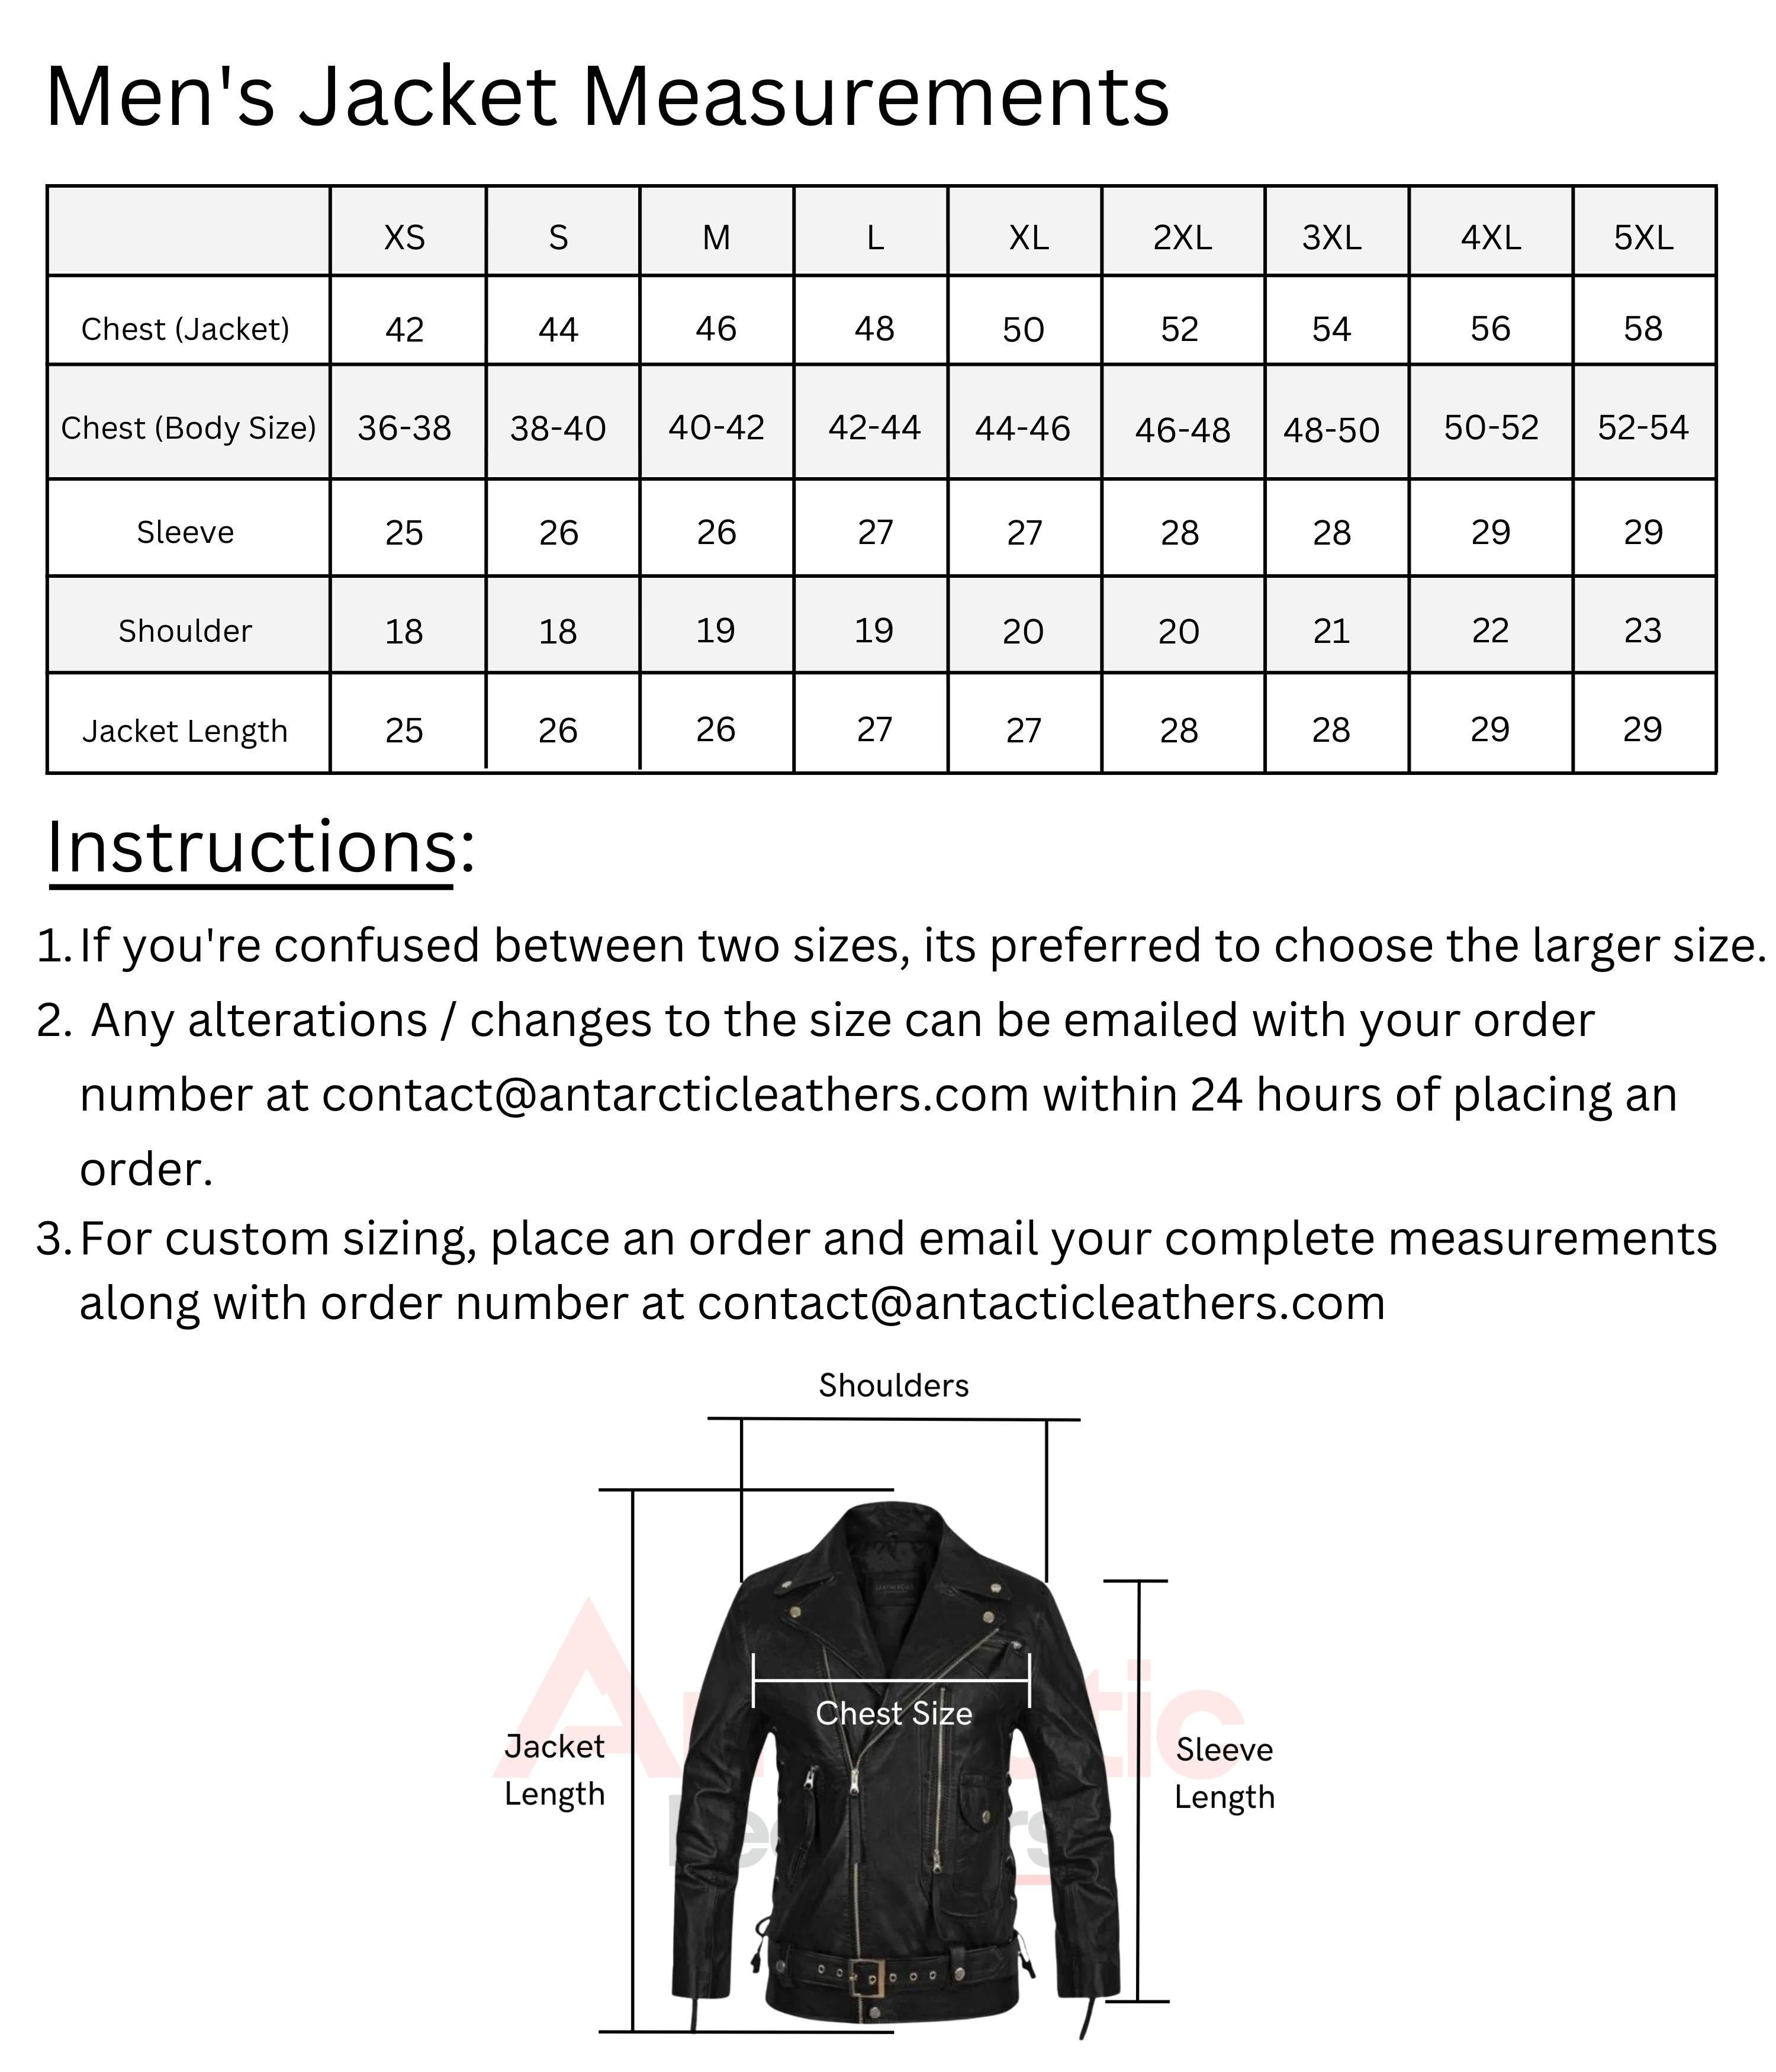 Brownstone Men's Brown Biker Leather Jacket